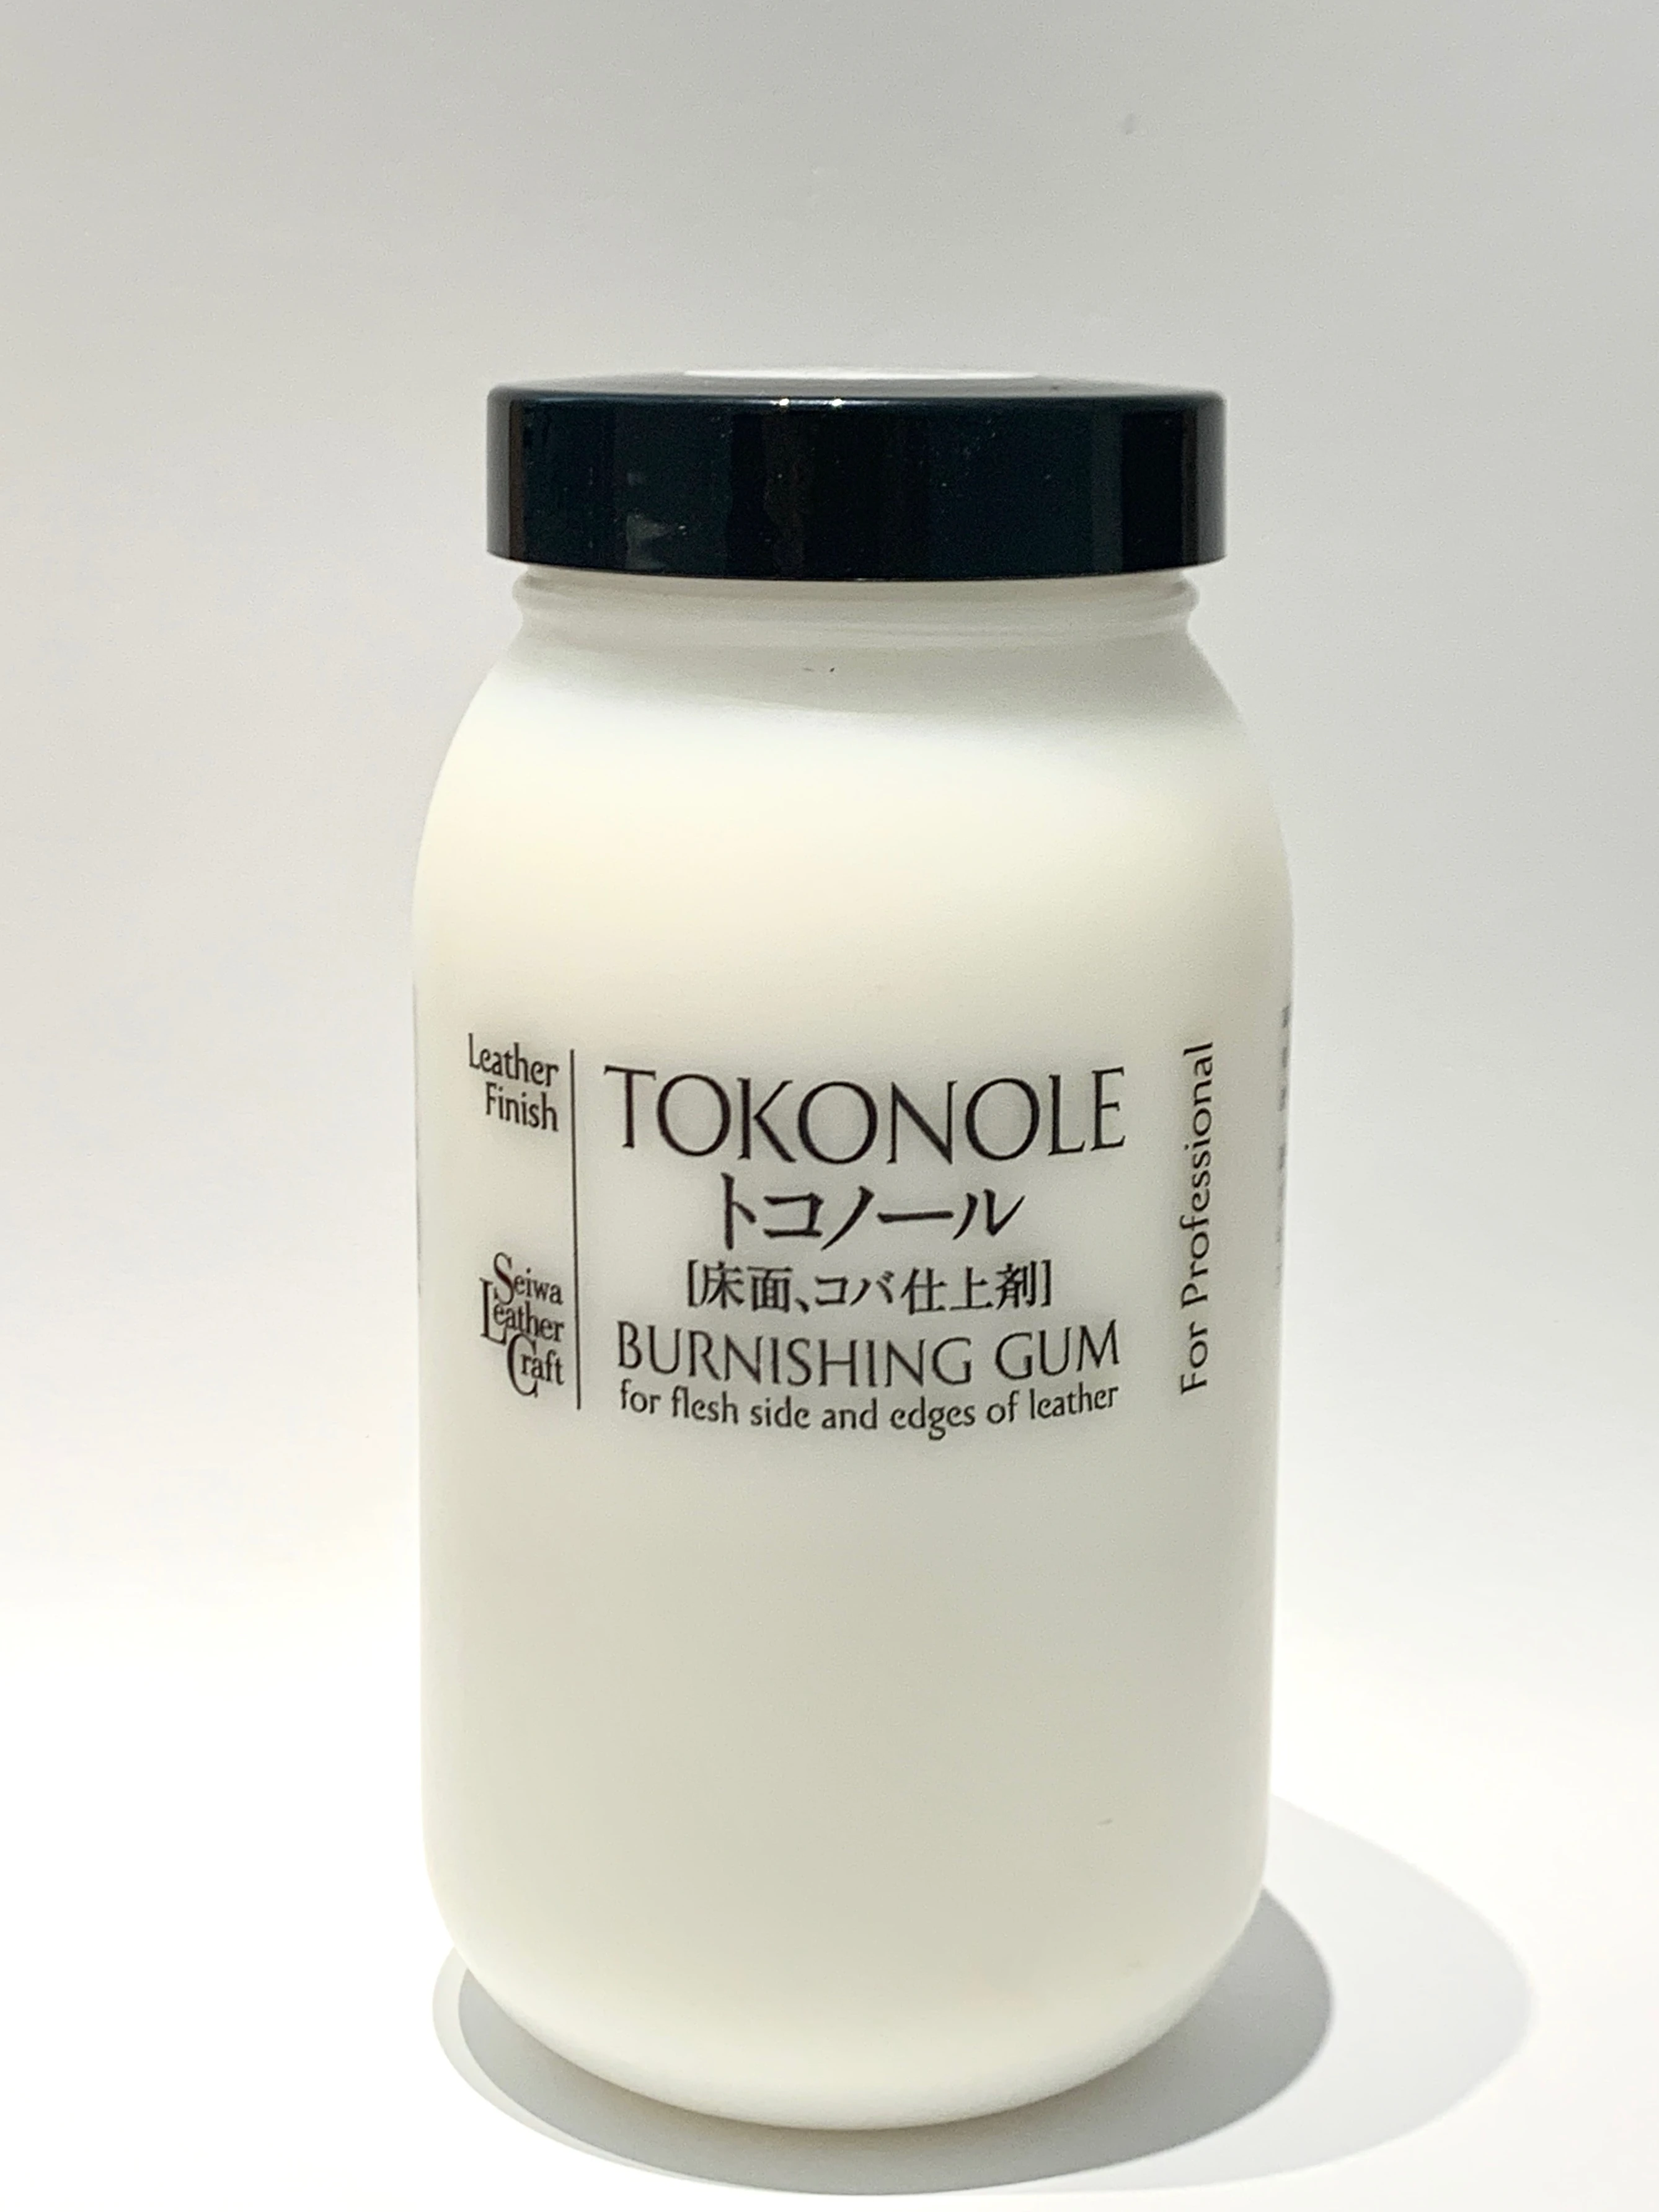 Japan Seiwa Leder Handwerk Tokonole Polier gummi klar neutral 120g/500g